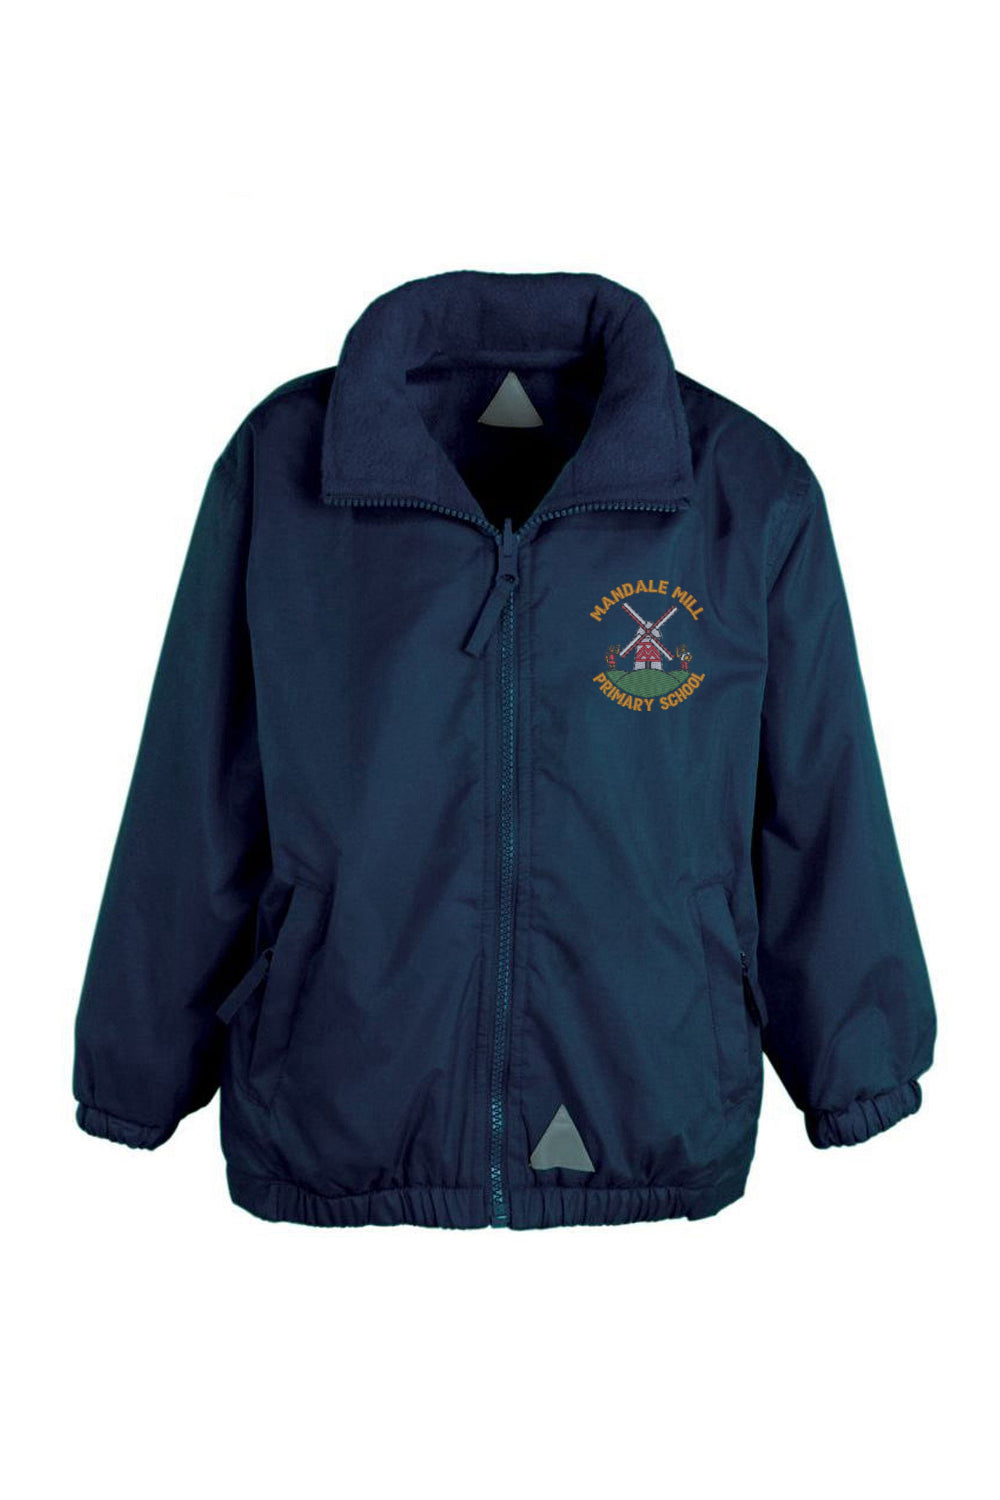 Mandale Mill Navy Shower Jacket